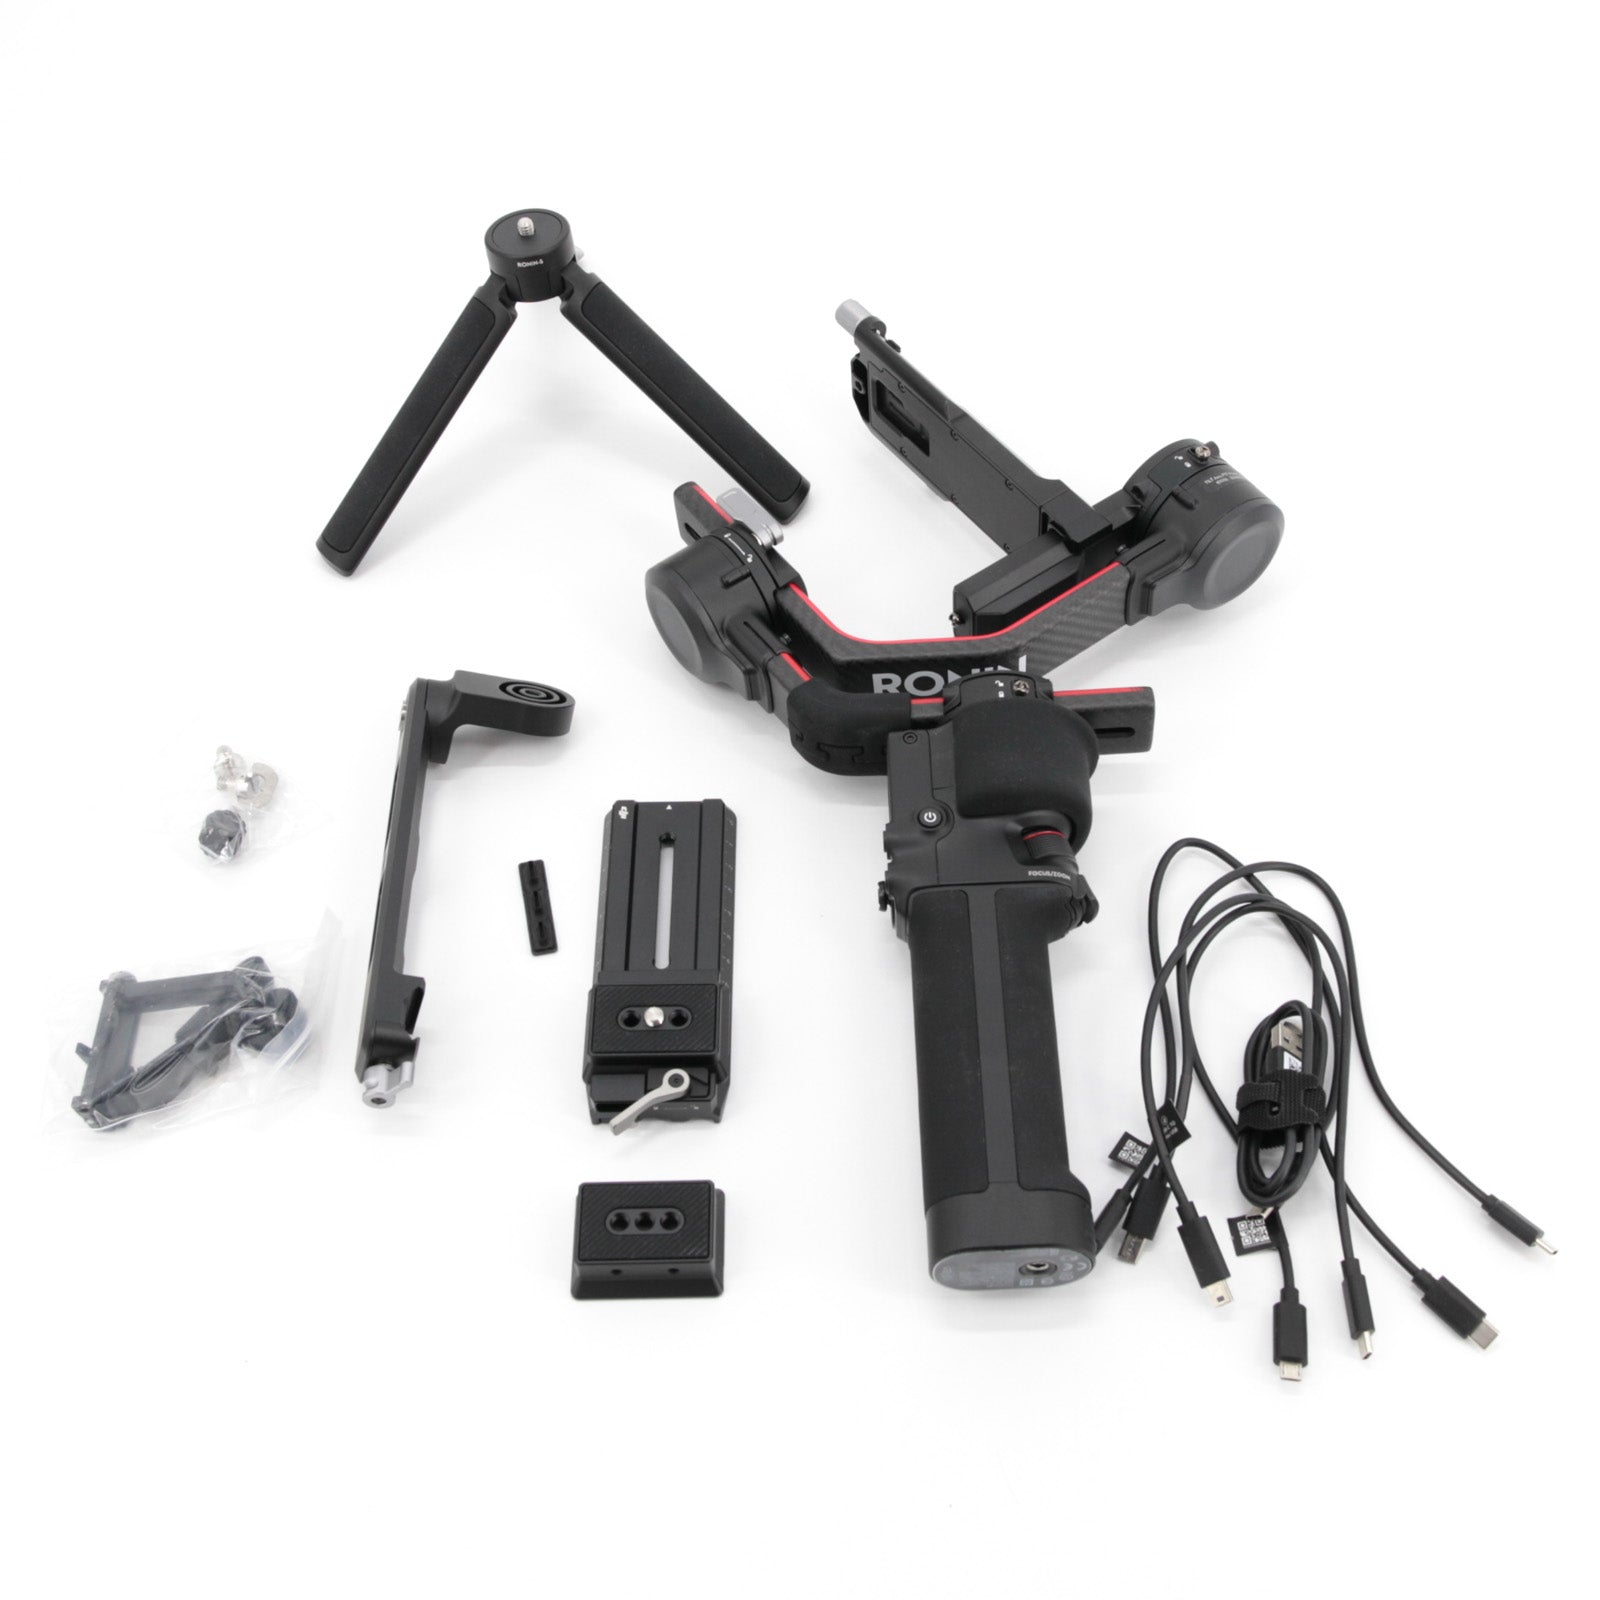 DJI RS 2 Gimbal 3-axis camera Stabiliser Kit for DSLR Cameras